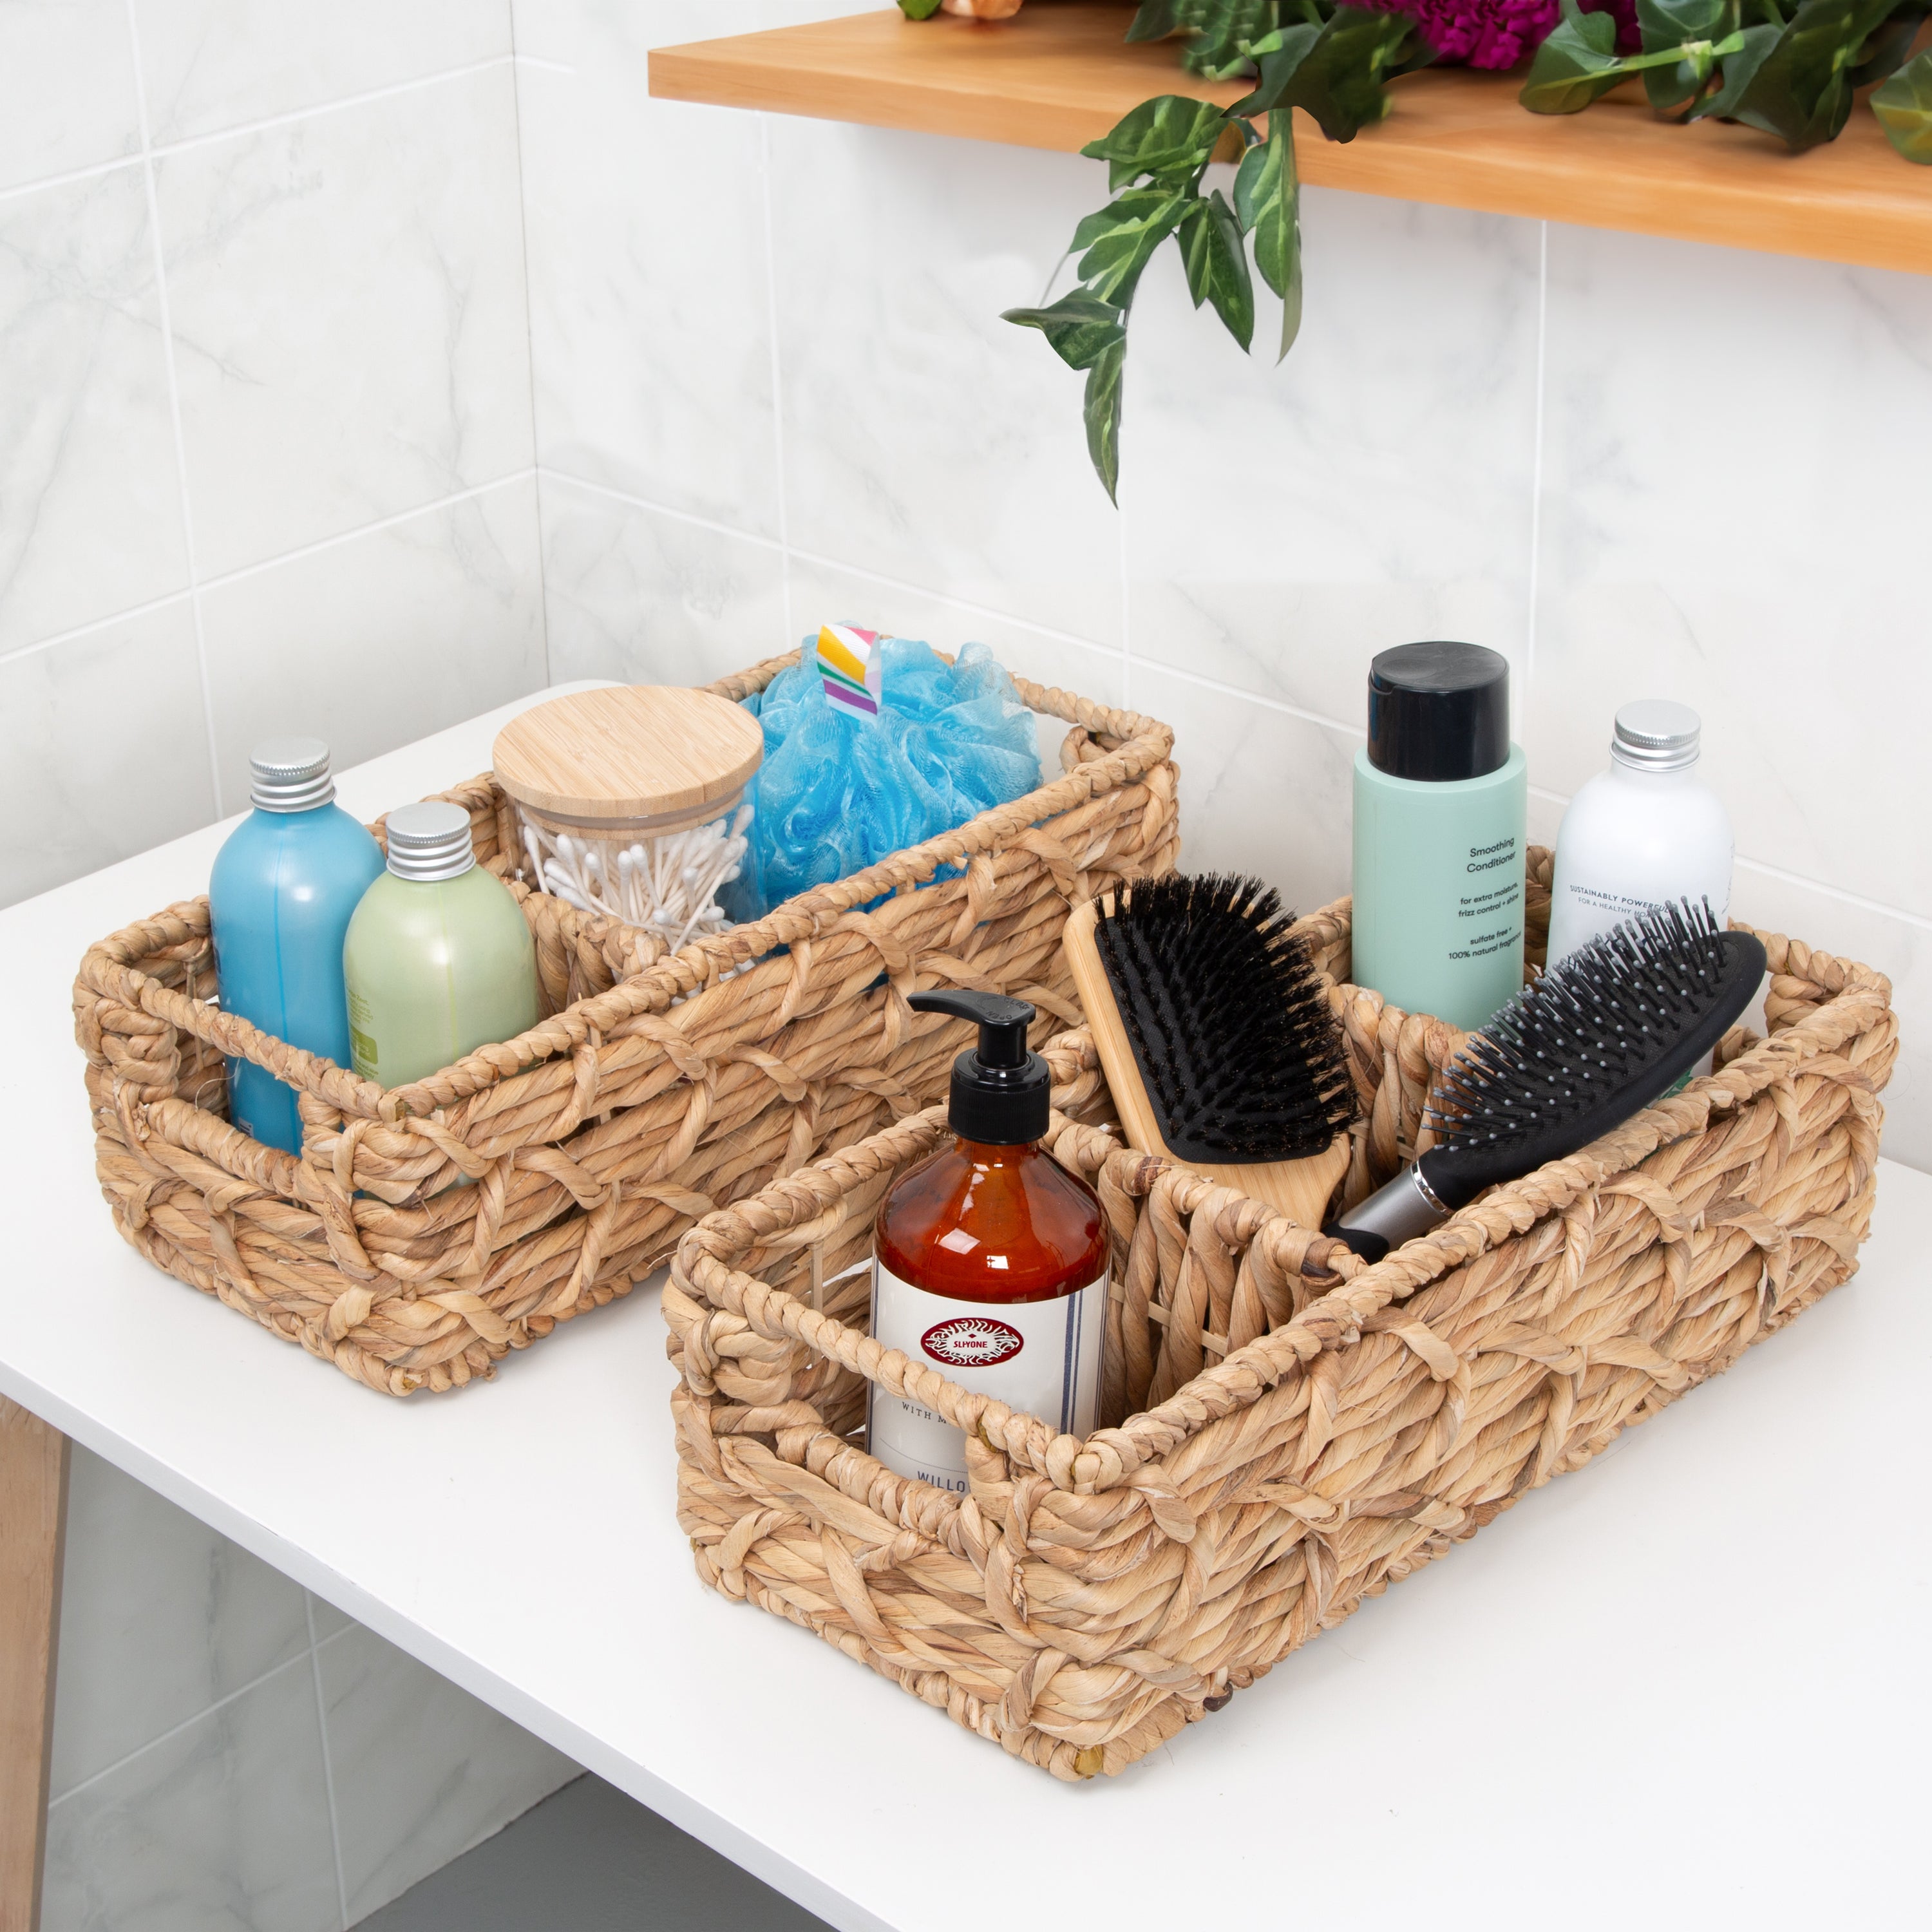 Natural Wood Toiletries Storage Bin and Toilet Paper Roll Holder, Organizer  Basket